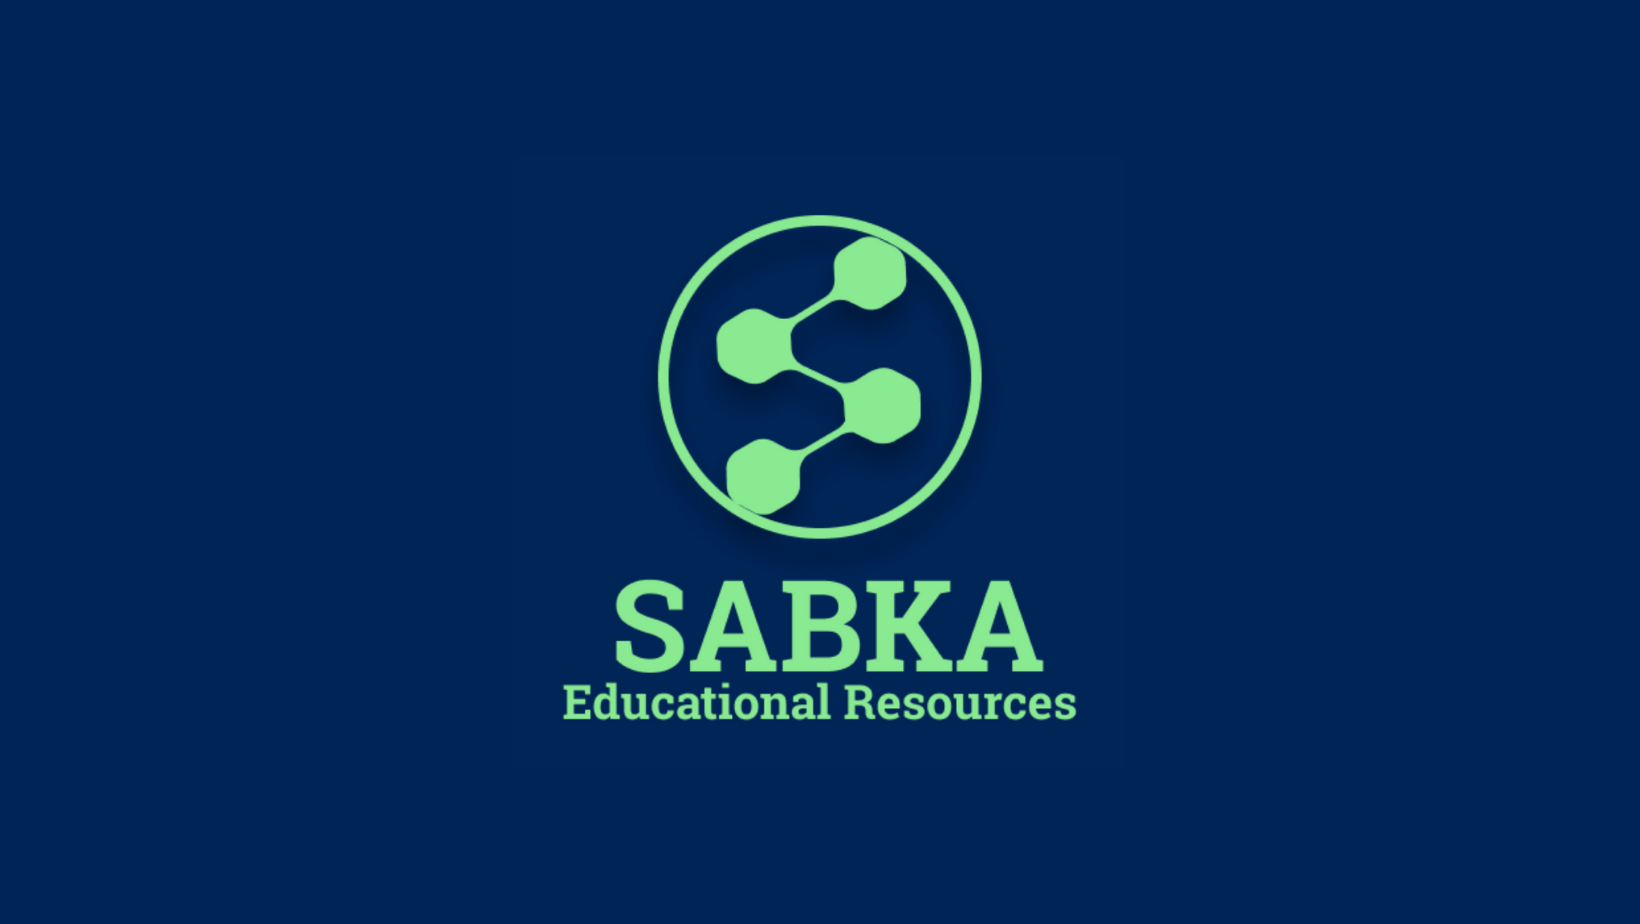 Cover with Sabka logo